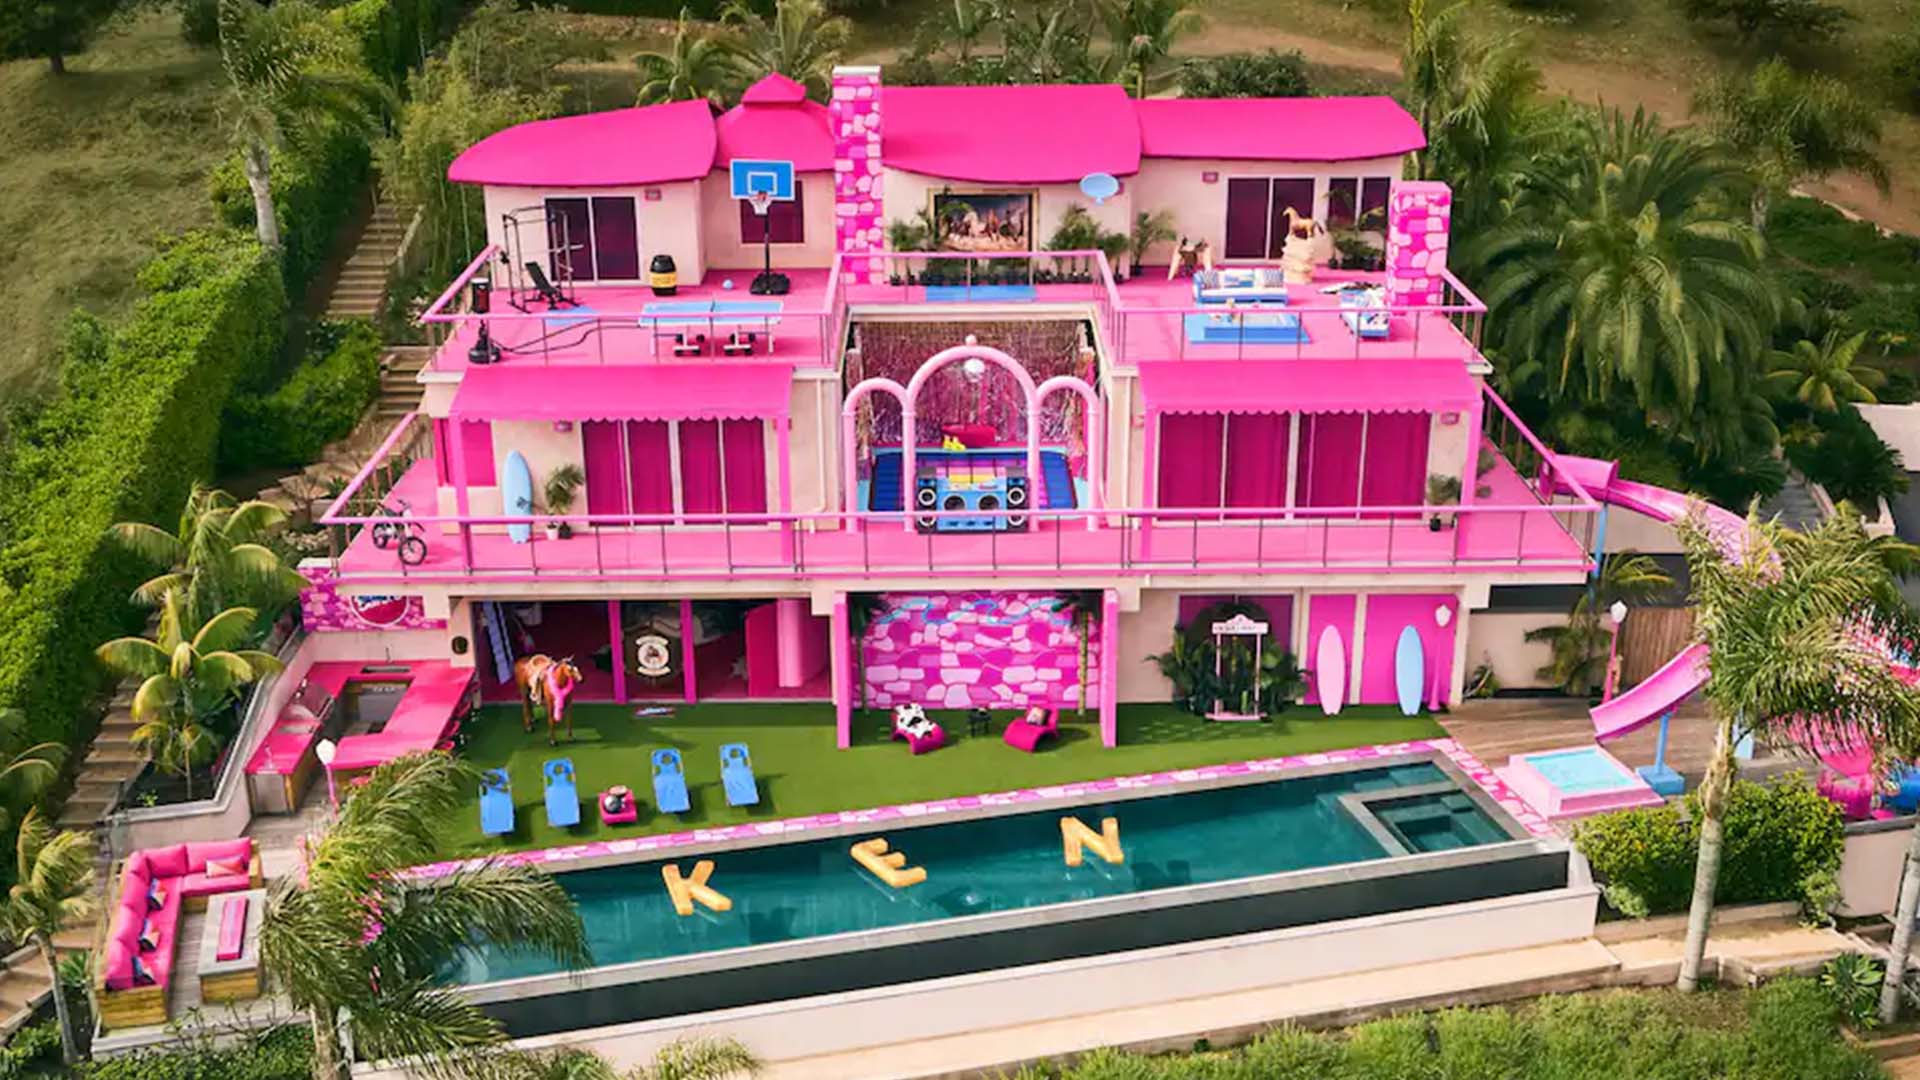 Barbie’s Malibu DreamHouse - Malibu, California